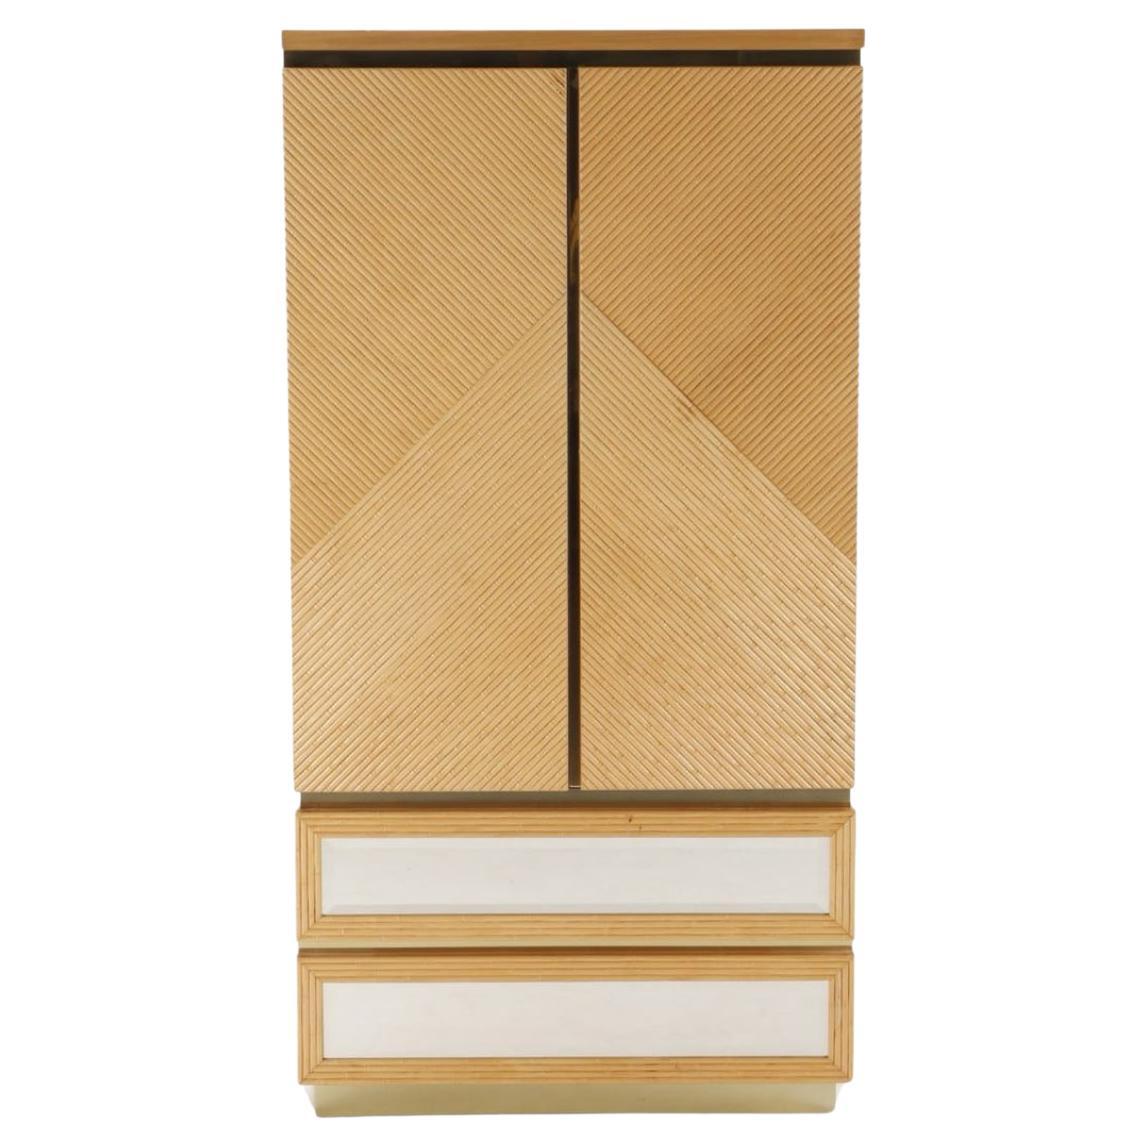 The Moderns Modernity oak mirror front dresser wardrobe or armoire